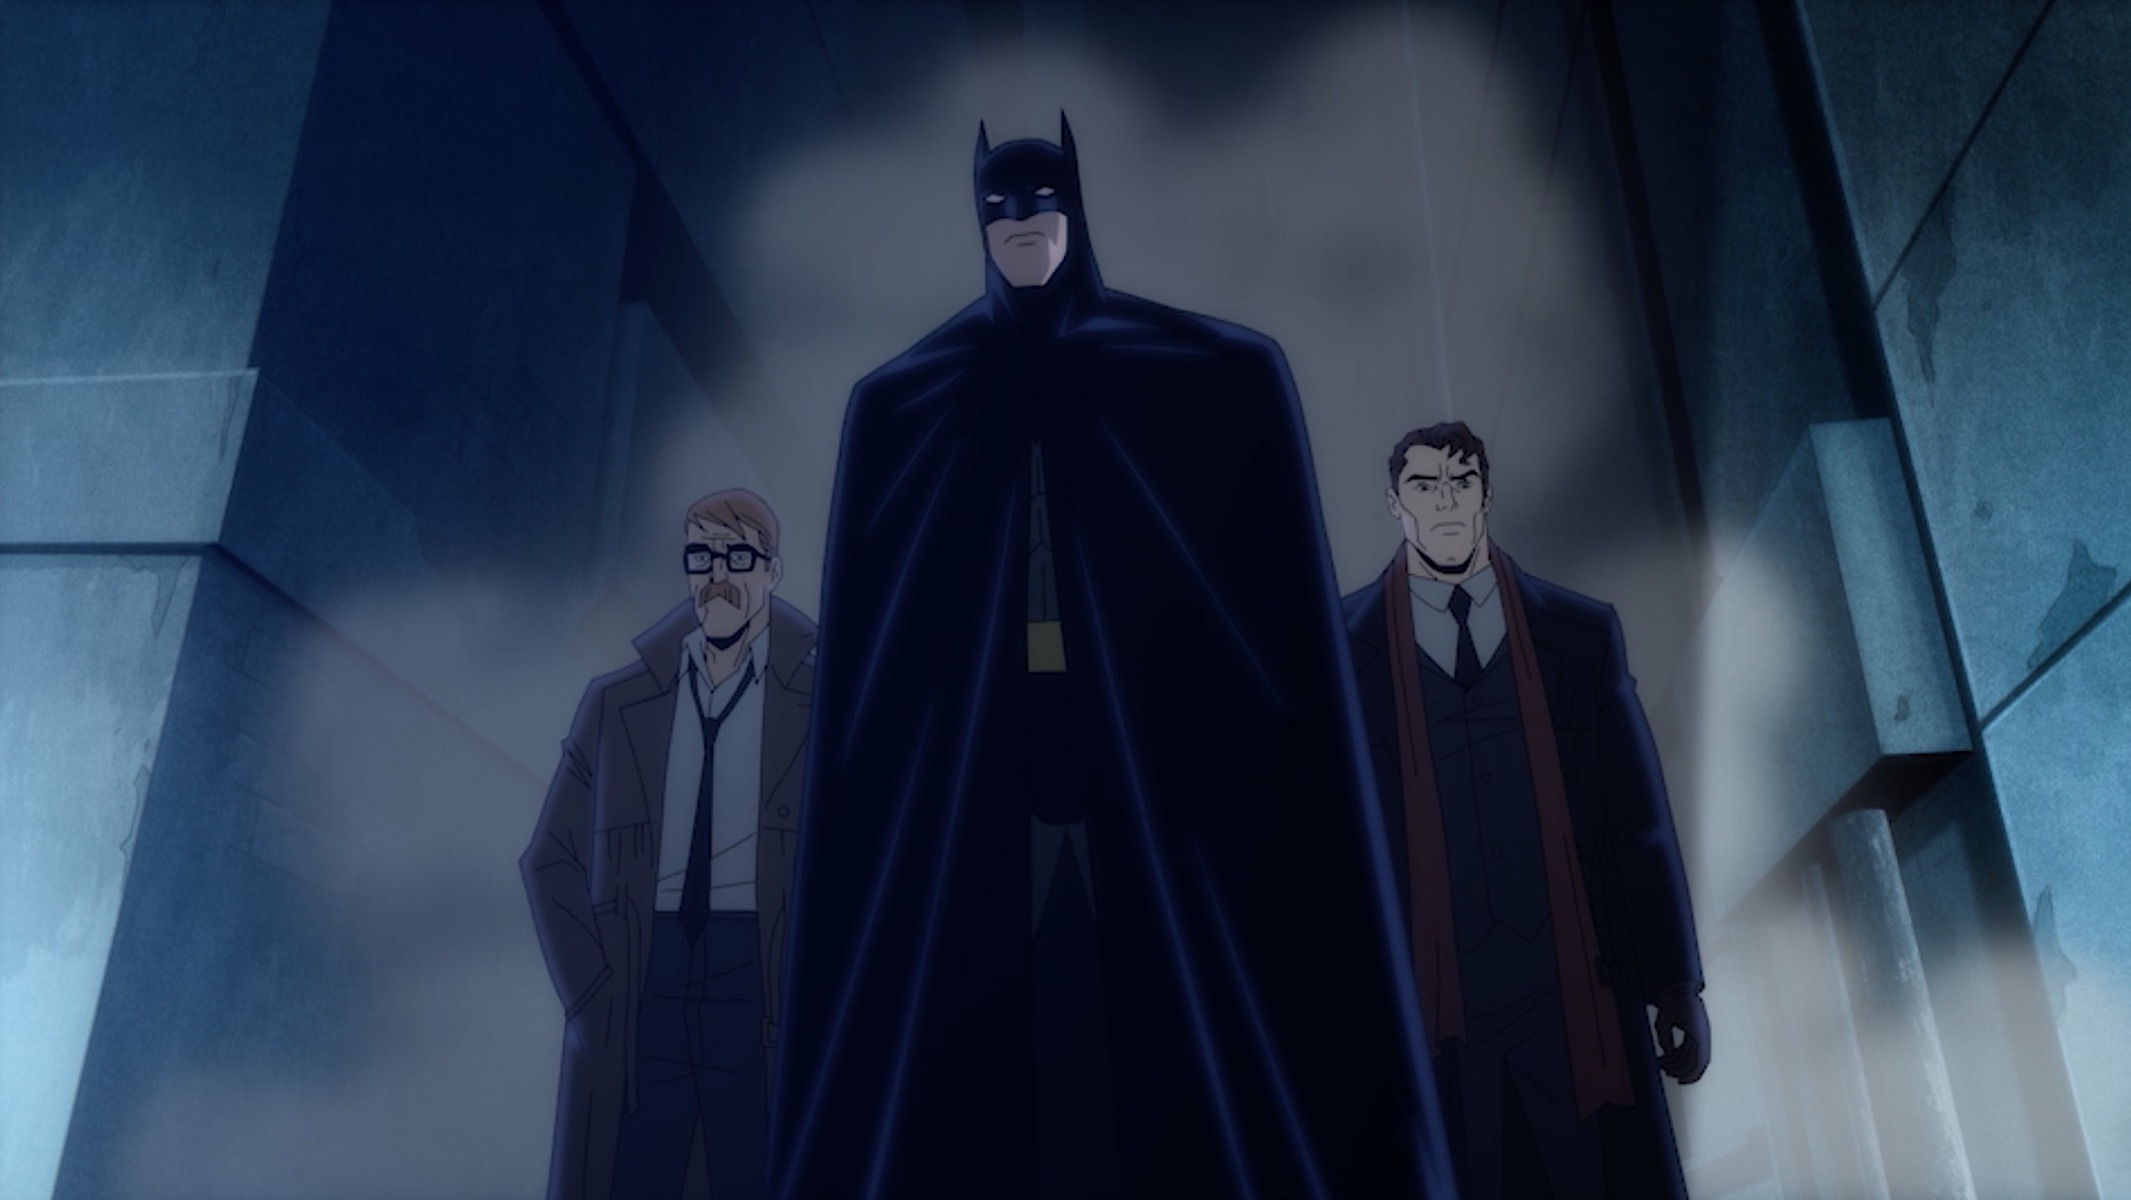 Batman, Jim Gordon, and Harvey Dent